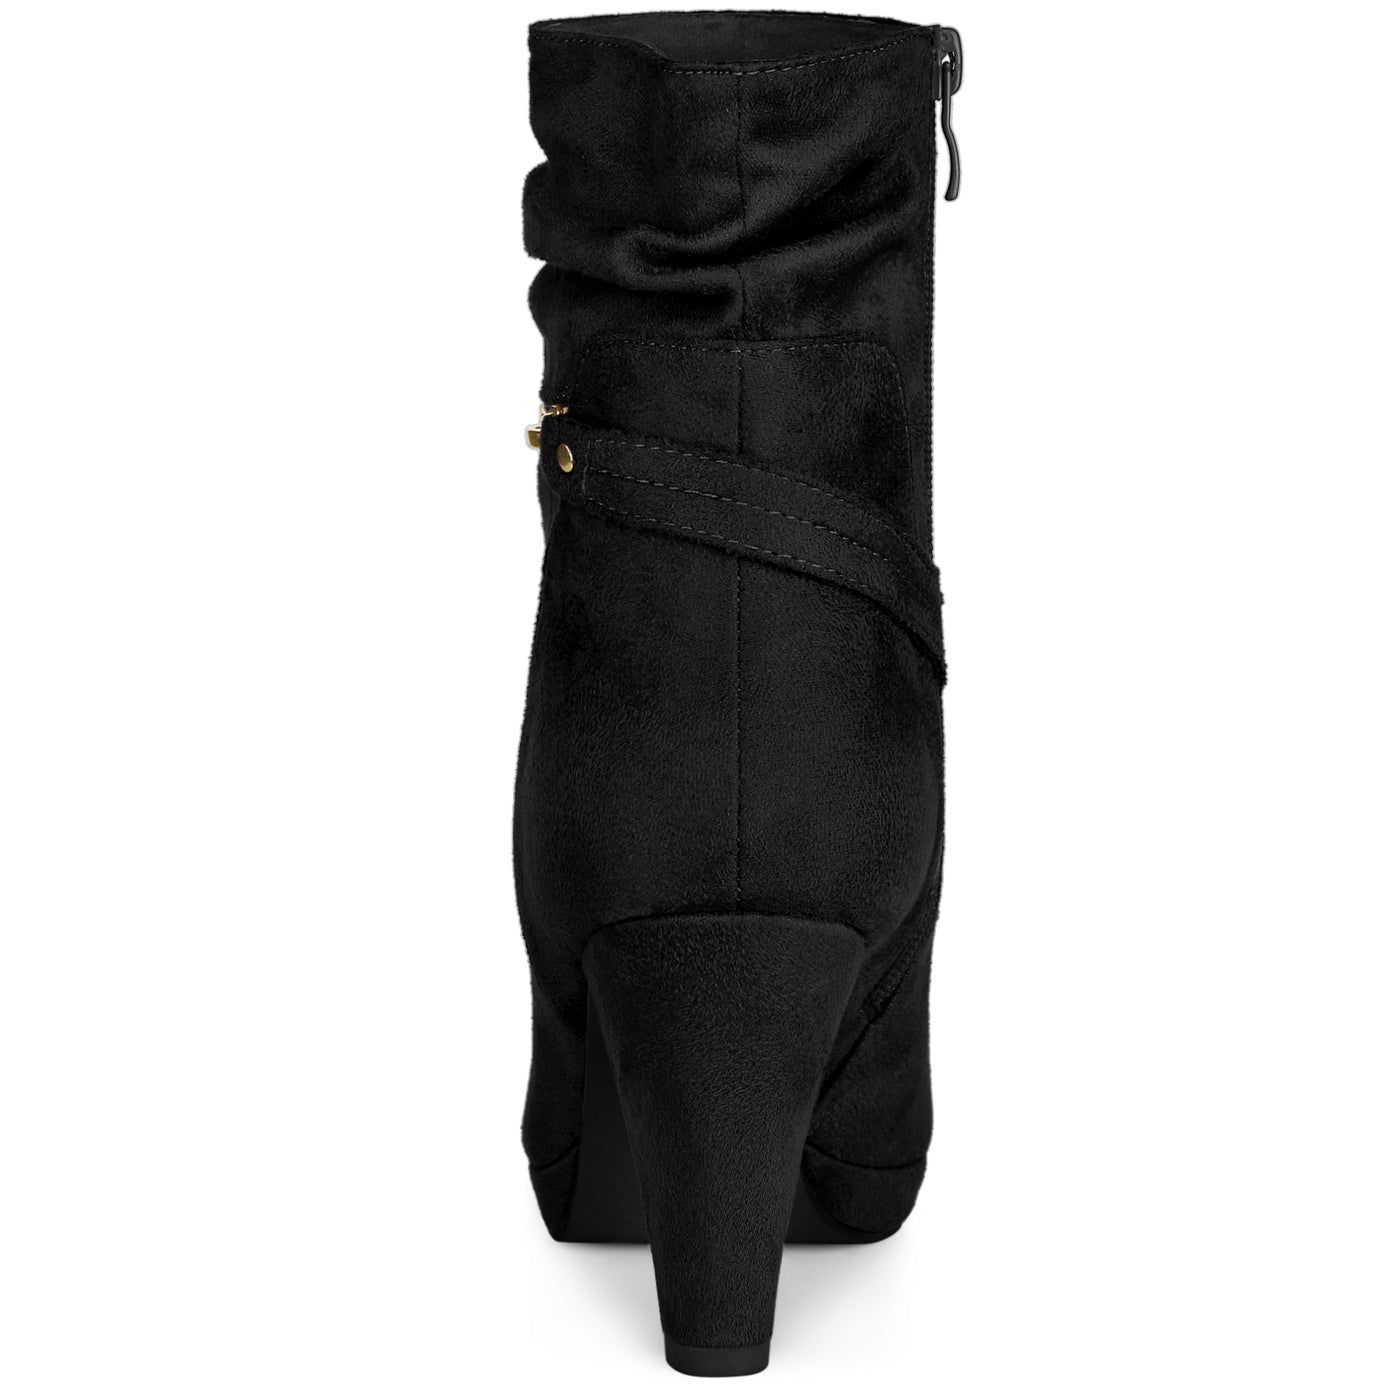 Bublédon Perphy Women's Ankle Zip Decor Platform Mid Calf Block Heels Boots